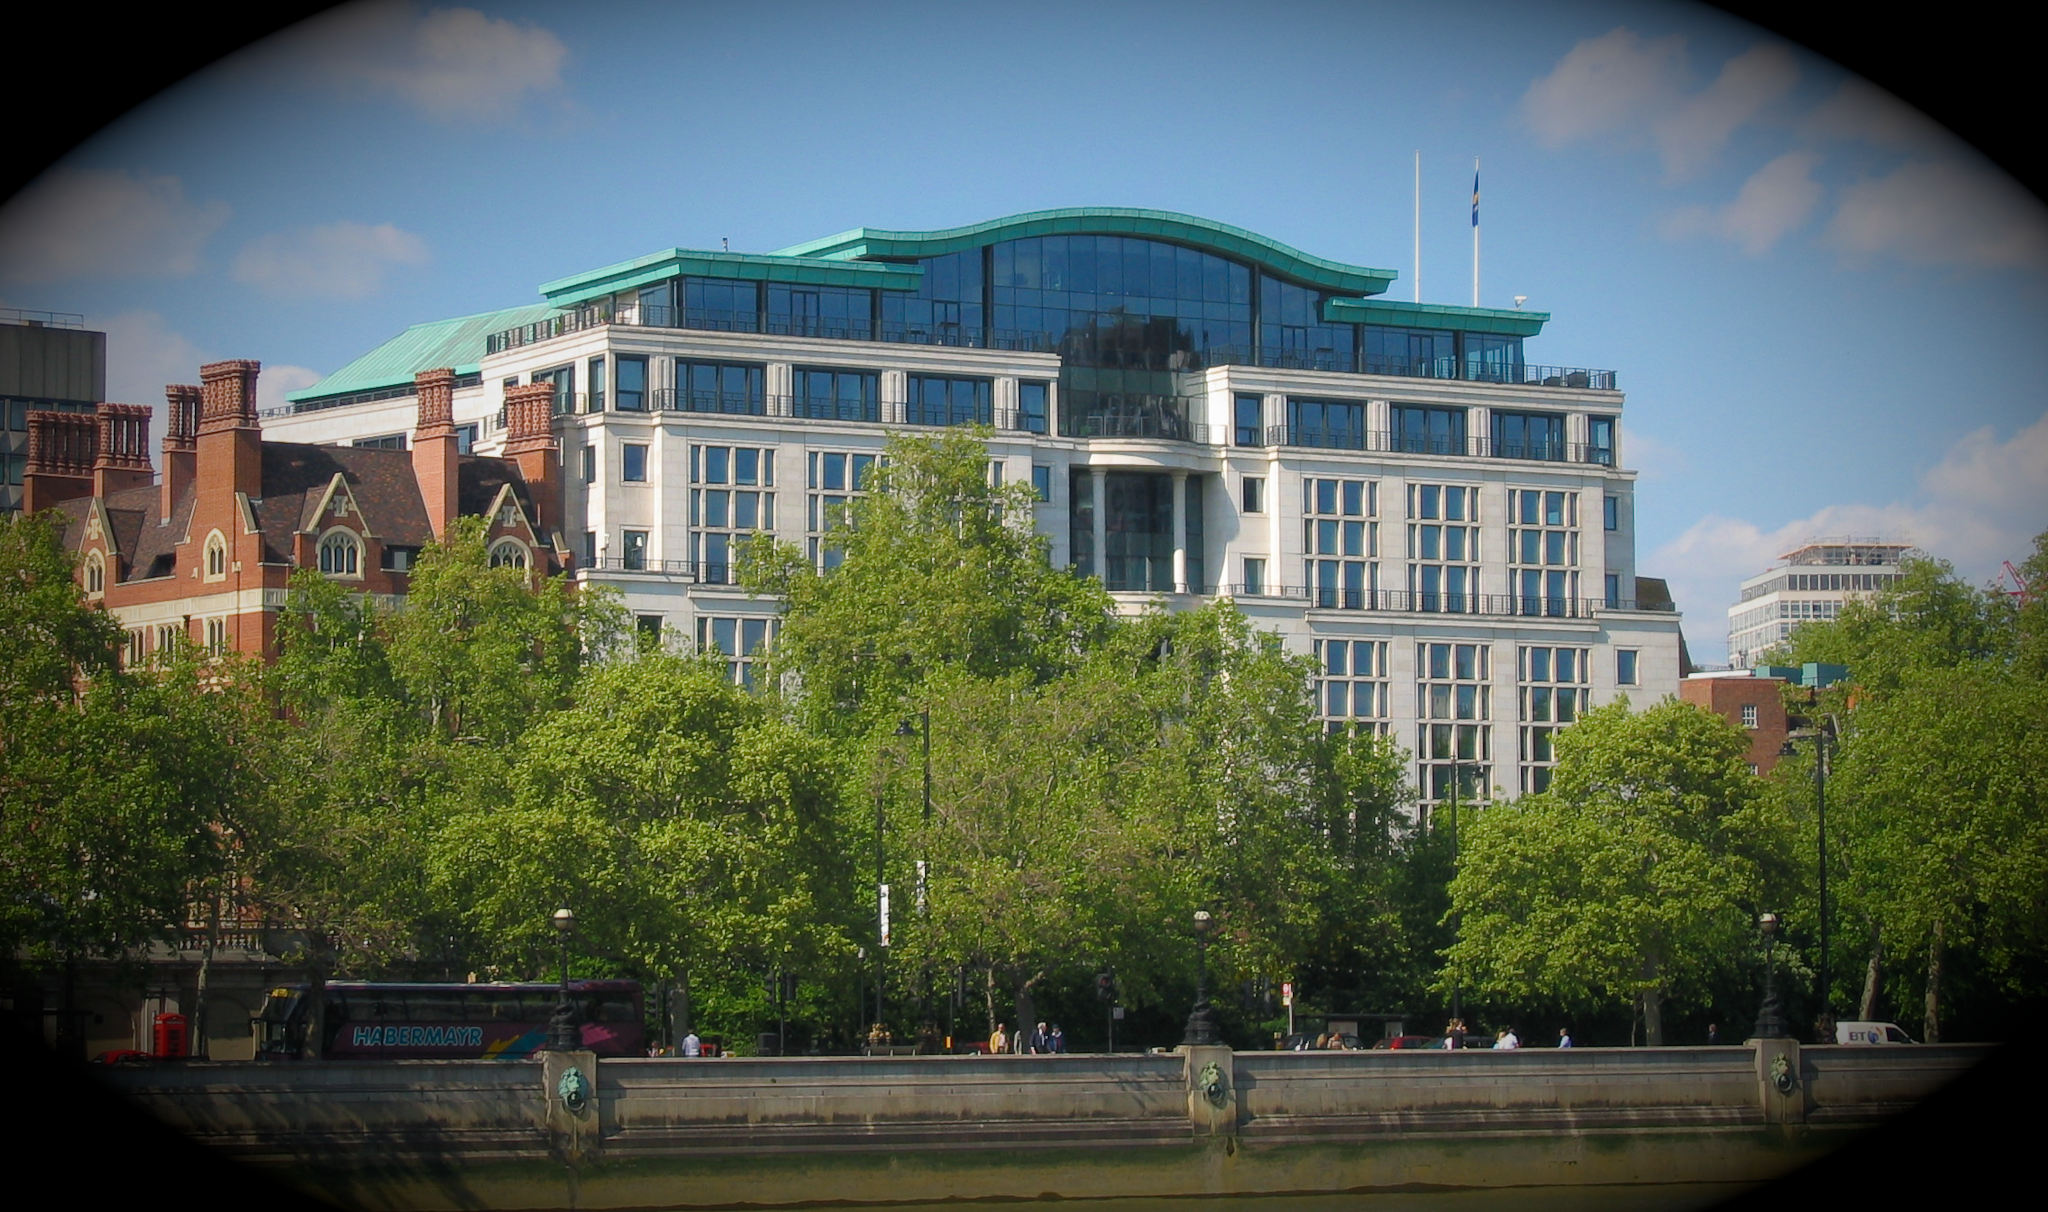 British American Tobacco’s headquarters on the Thames. (Photo: Wikimedia)